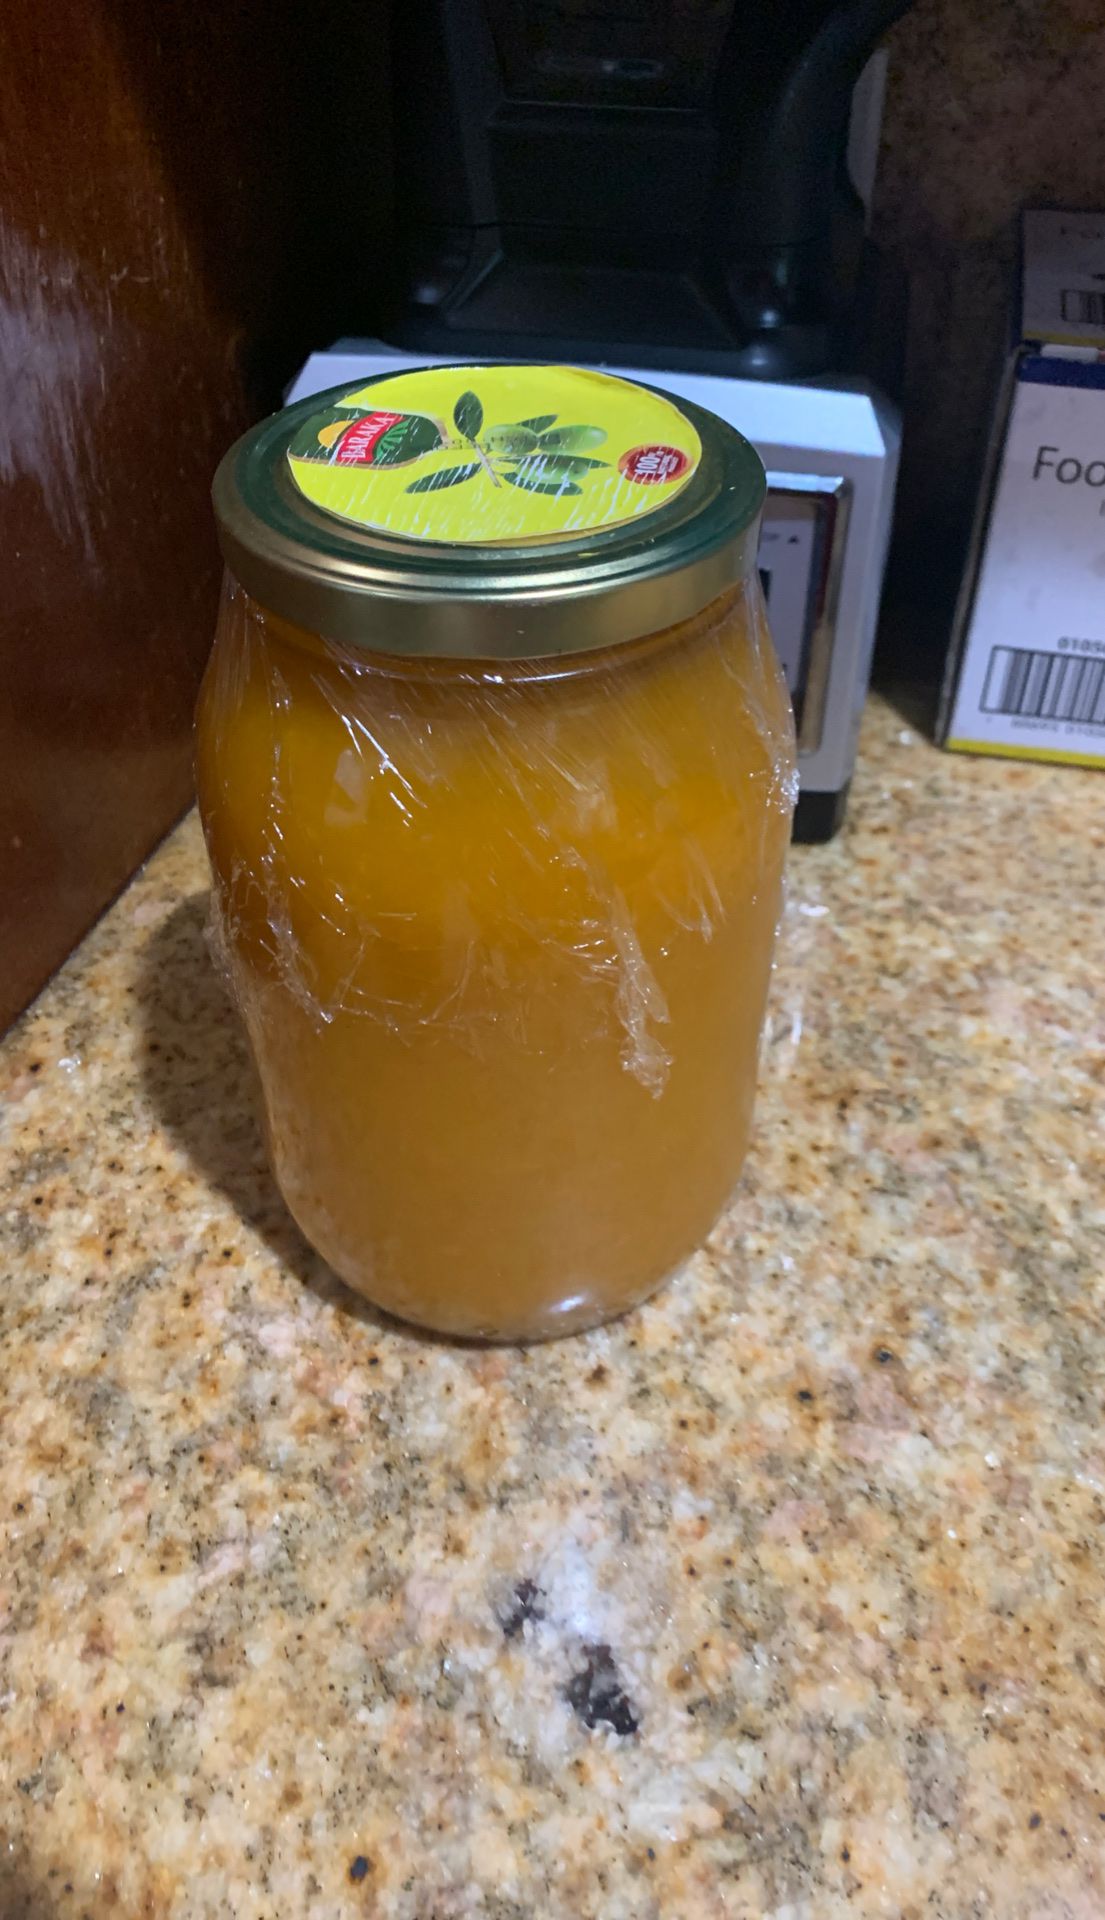 Mango jelly